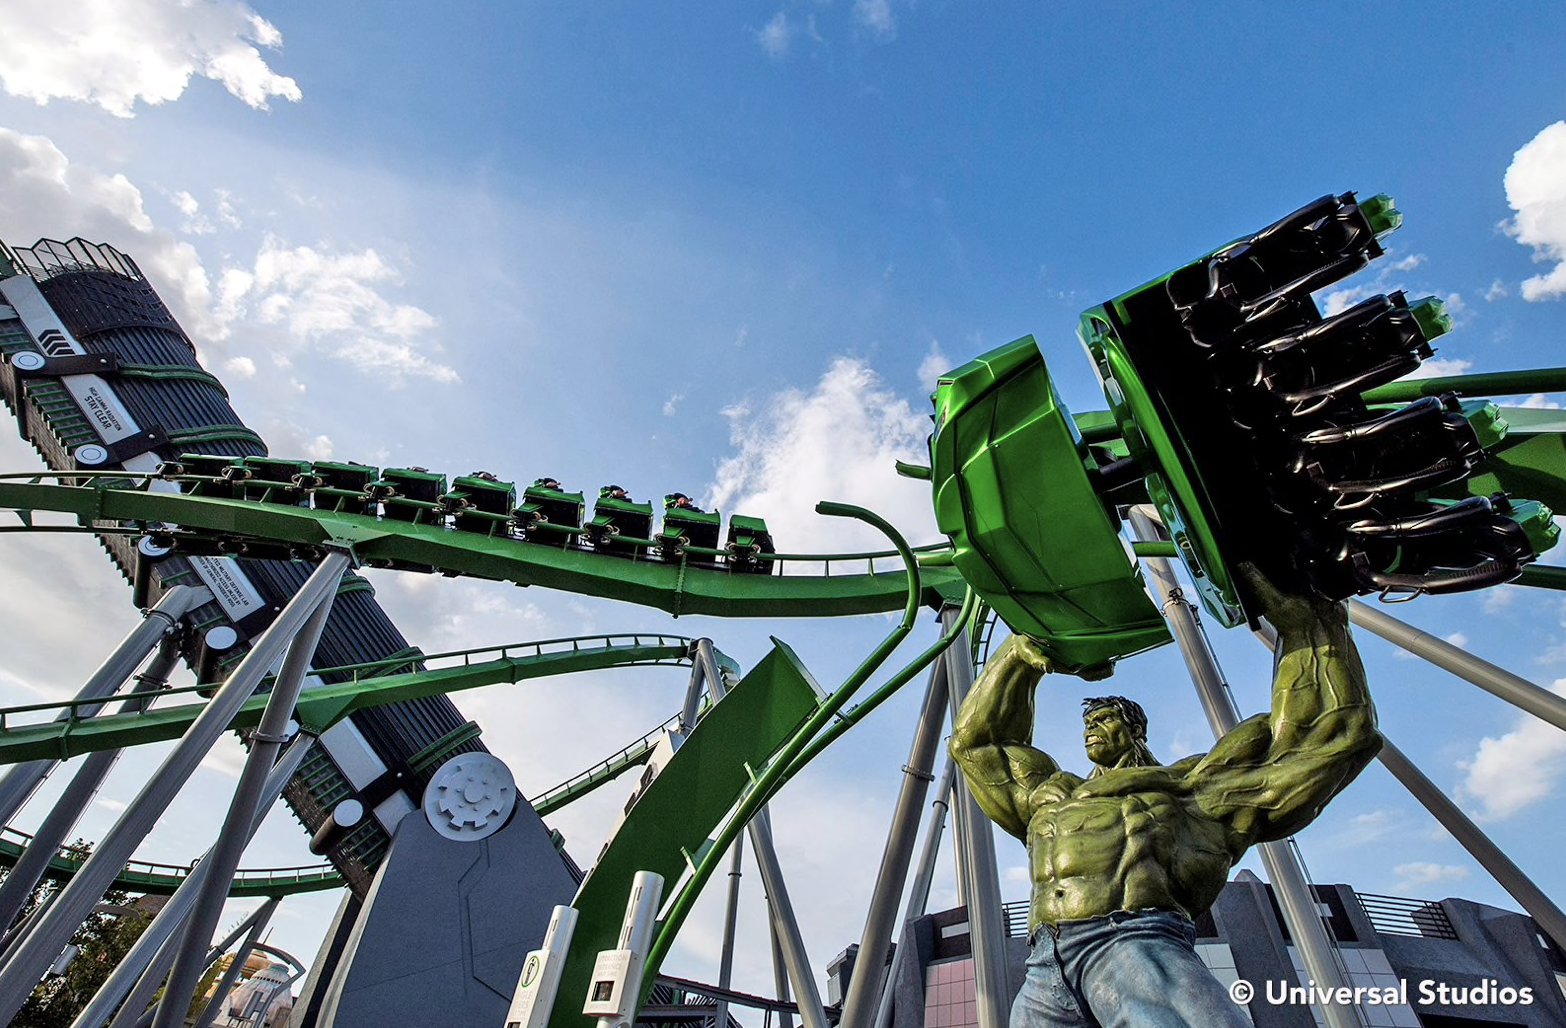 Incredible Hulk Coaster's revamped entrance